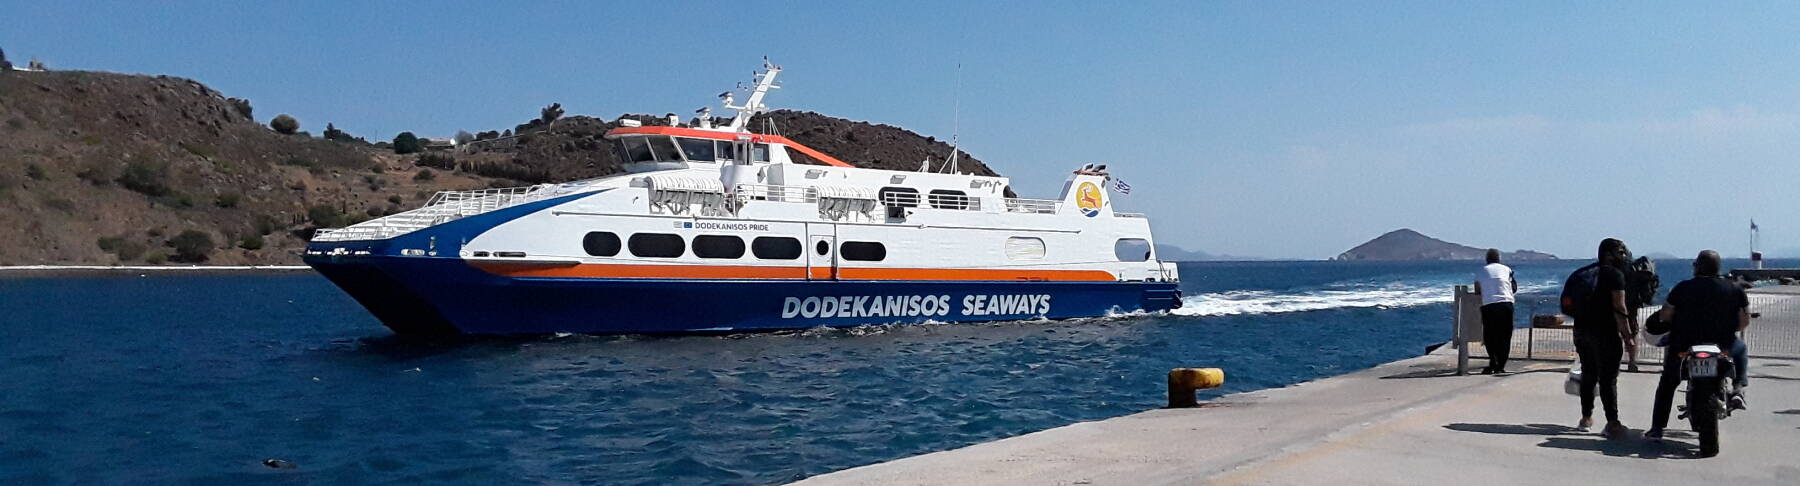 Dodekanisos Seaways ferry from Patmos to Leros.